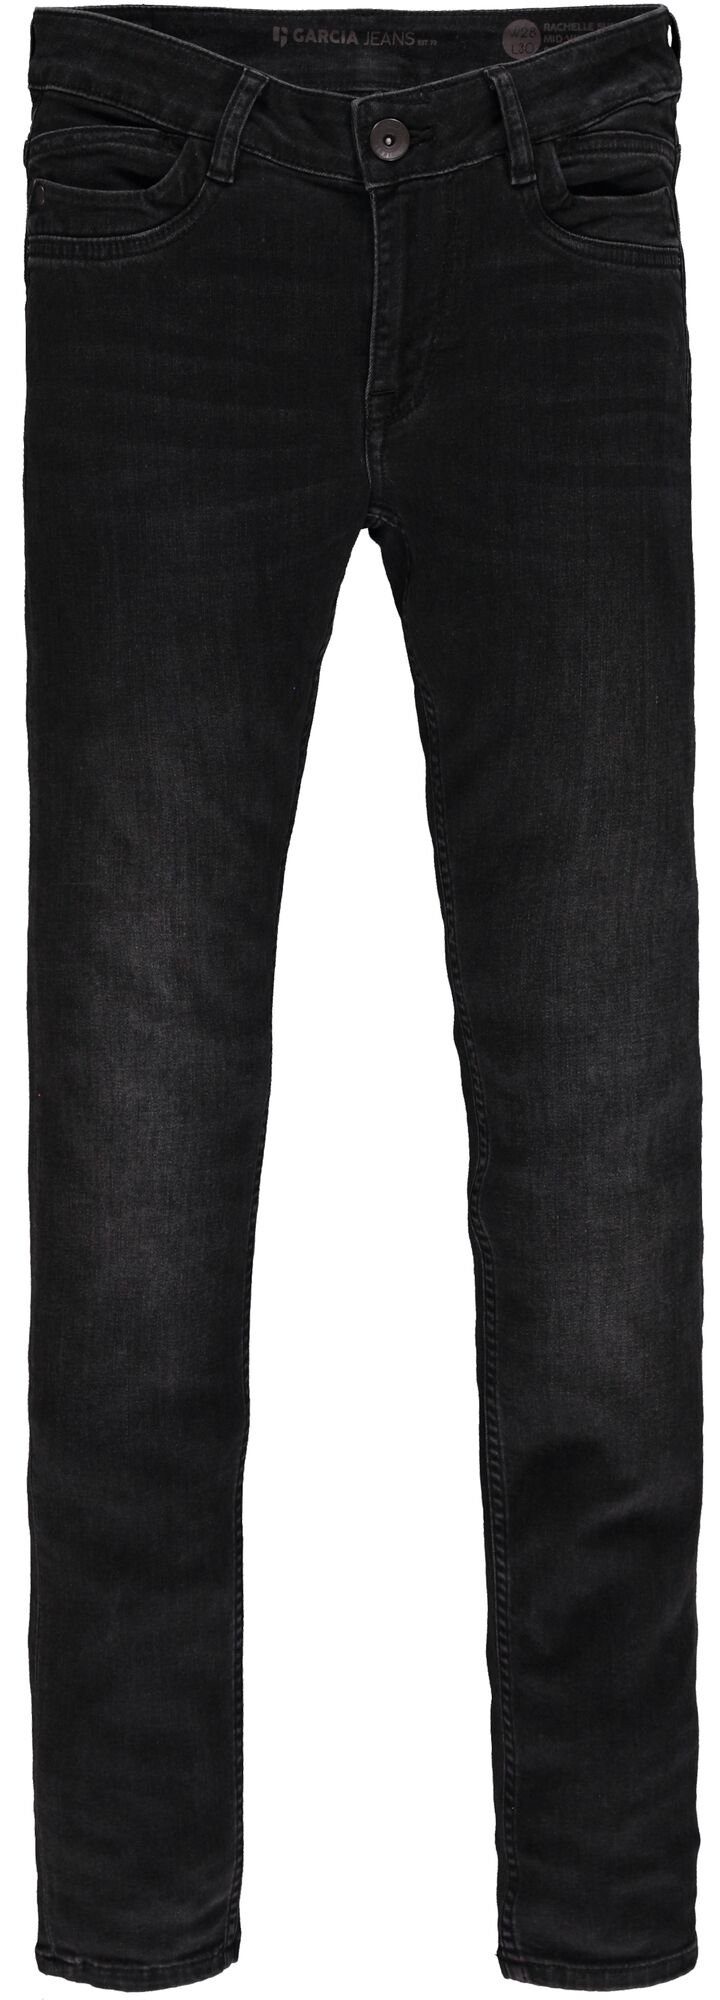 JEANS RACHELLE dark GARCIA black GARCIA Stretch-Jeans 279.8100 used